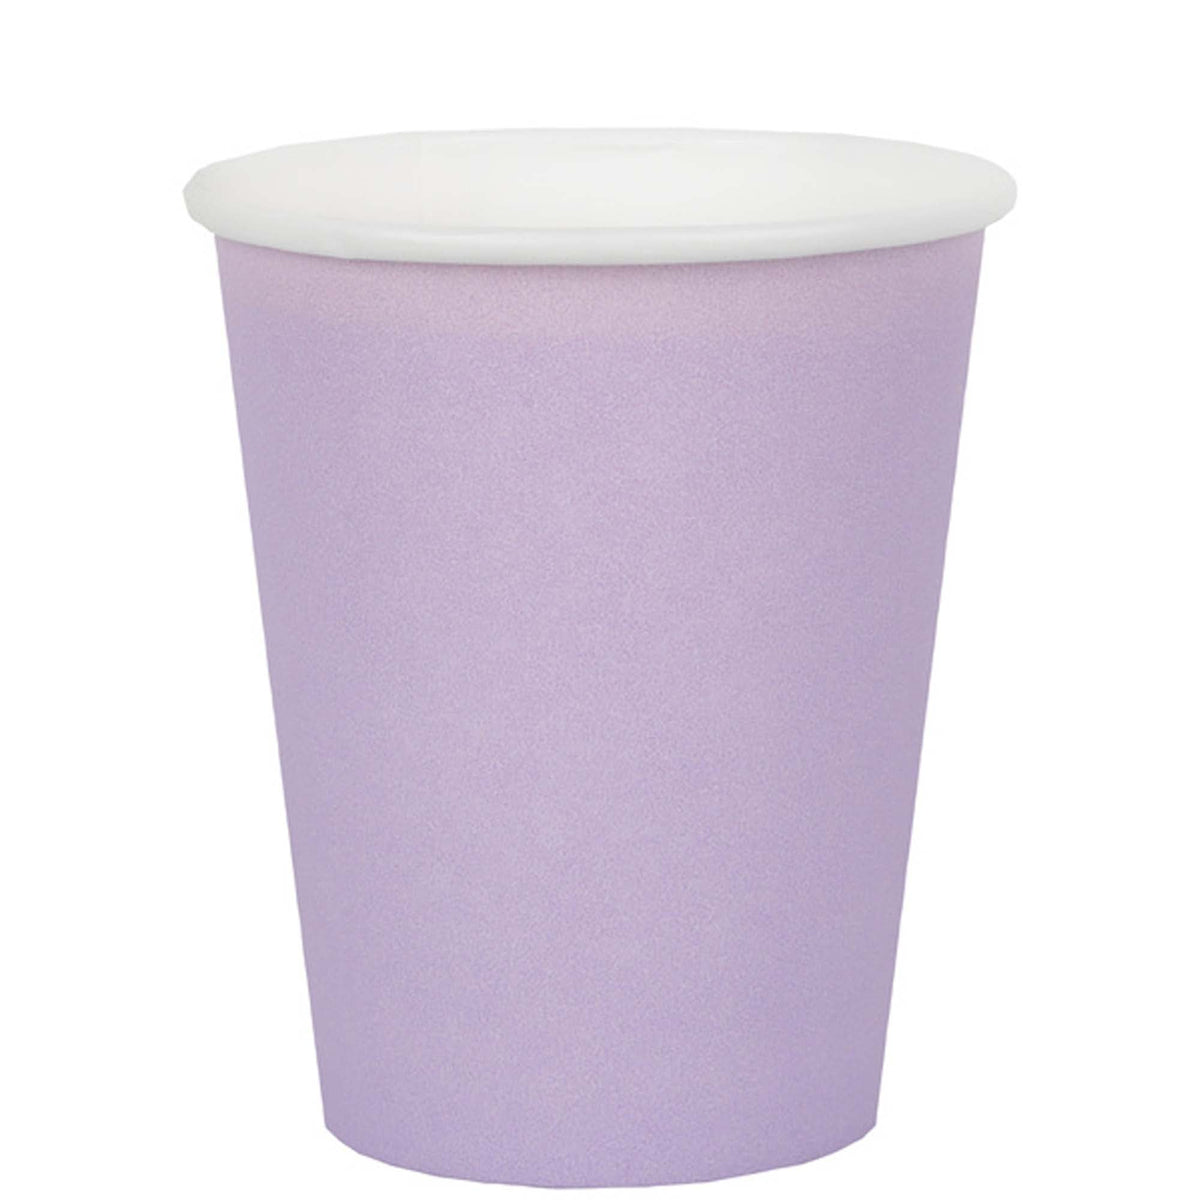 SANTEX Everyday Entertaining Violet Party Paper Cups, 9 Oz, 10 Count 3660380072959